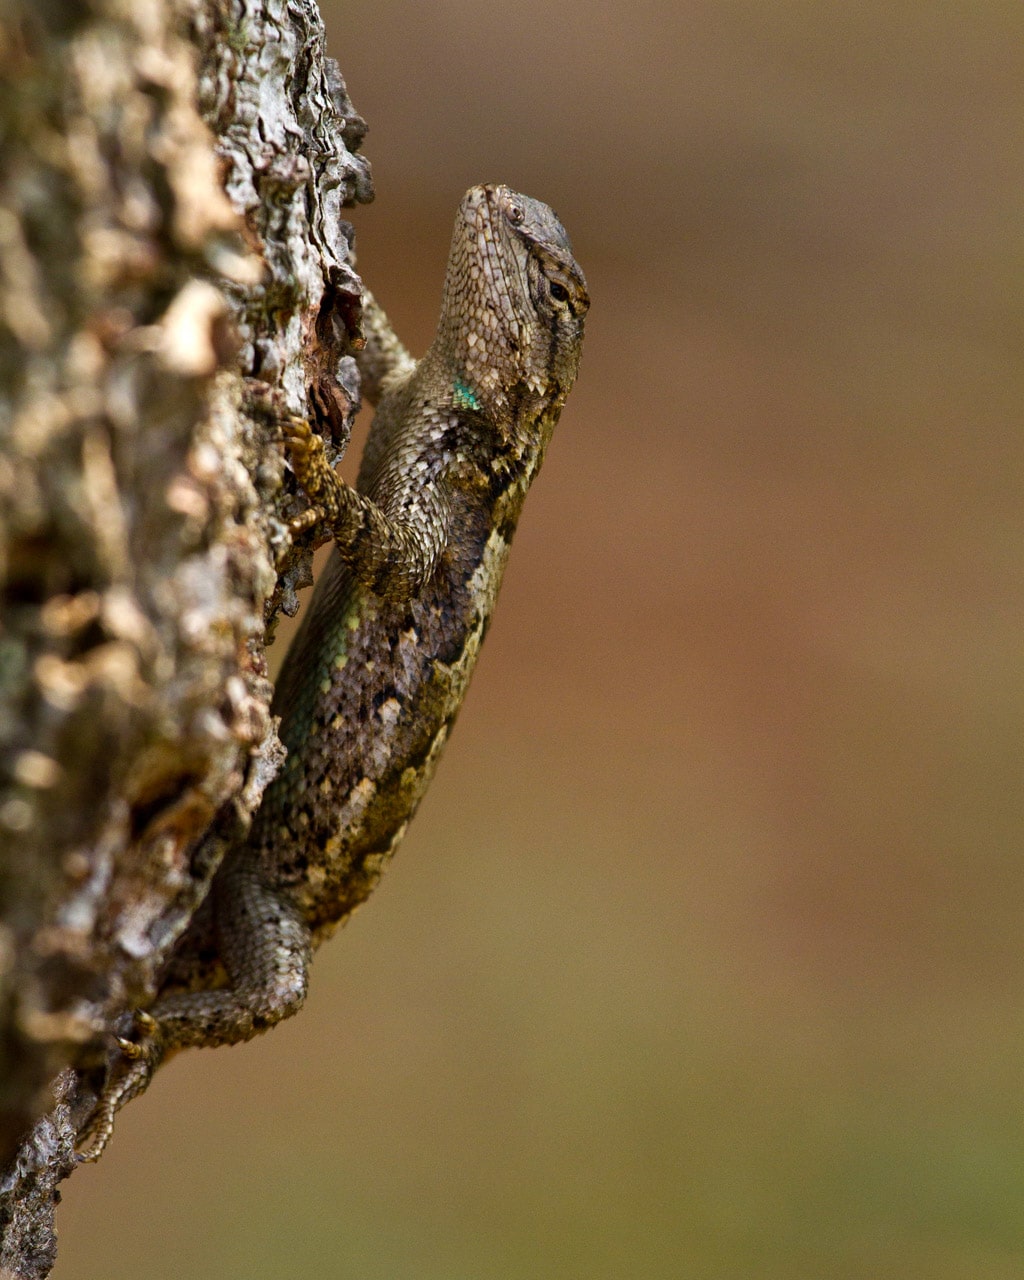 Eastern fence lizard in Shenandoah National Park, Virginia